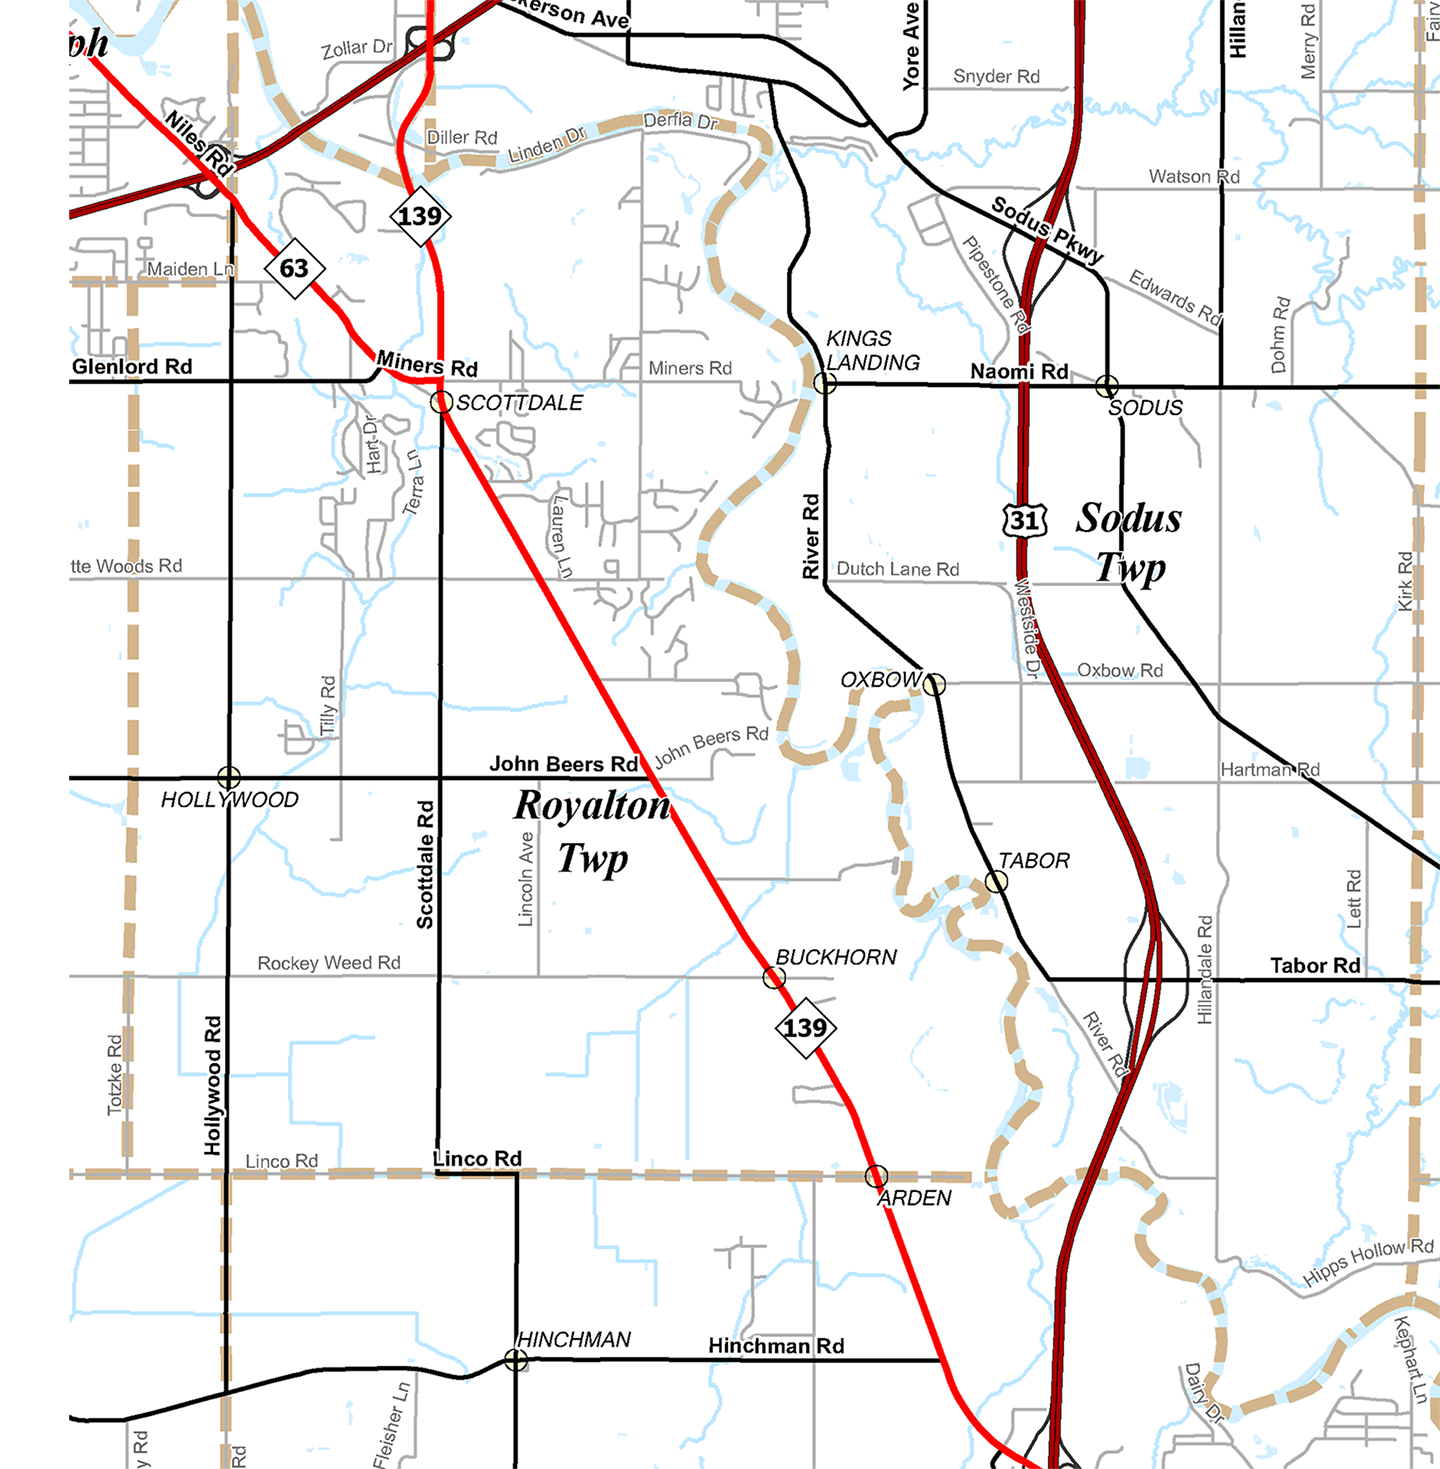 2009 Sodus Township, Michigan map